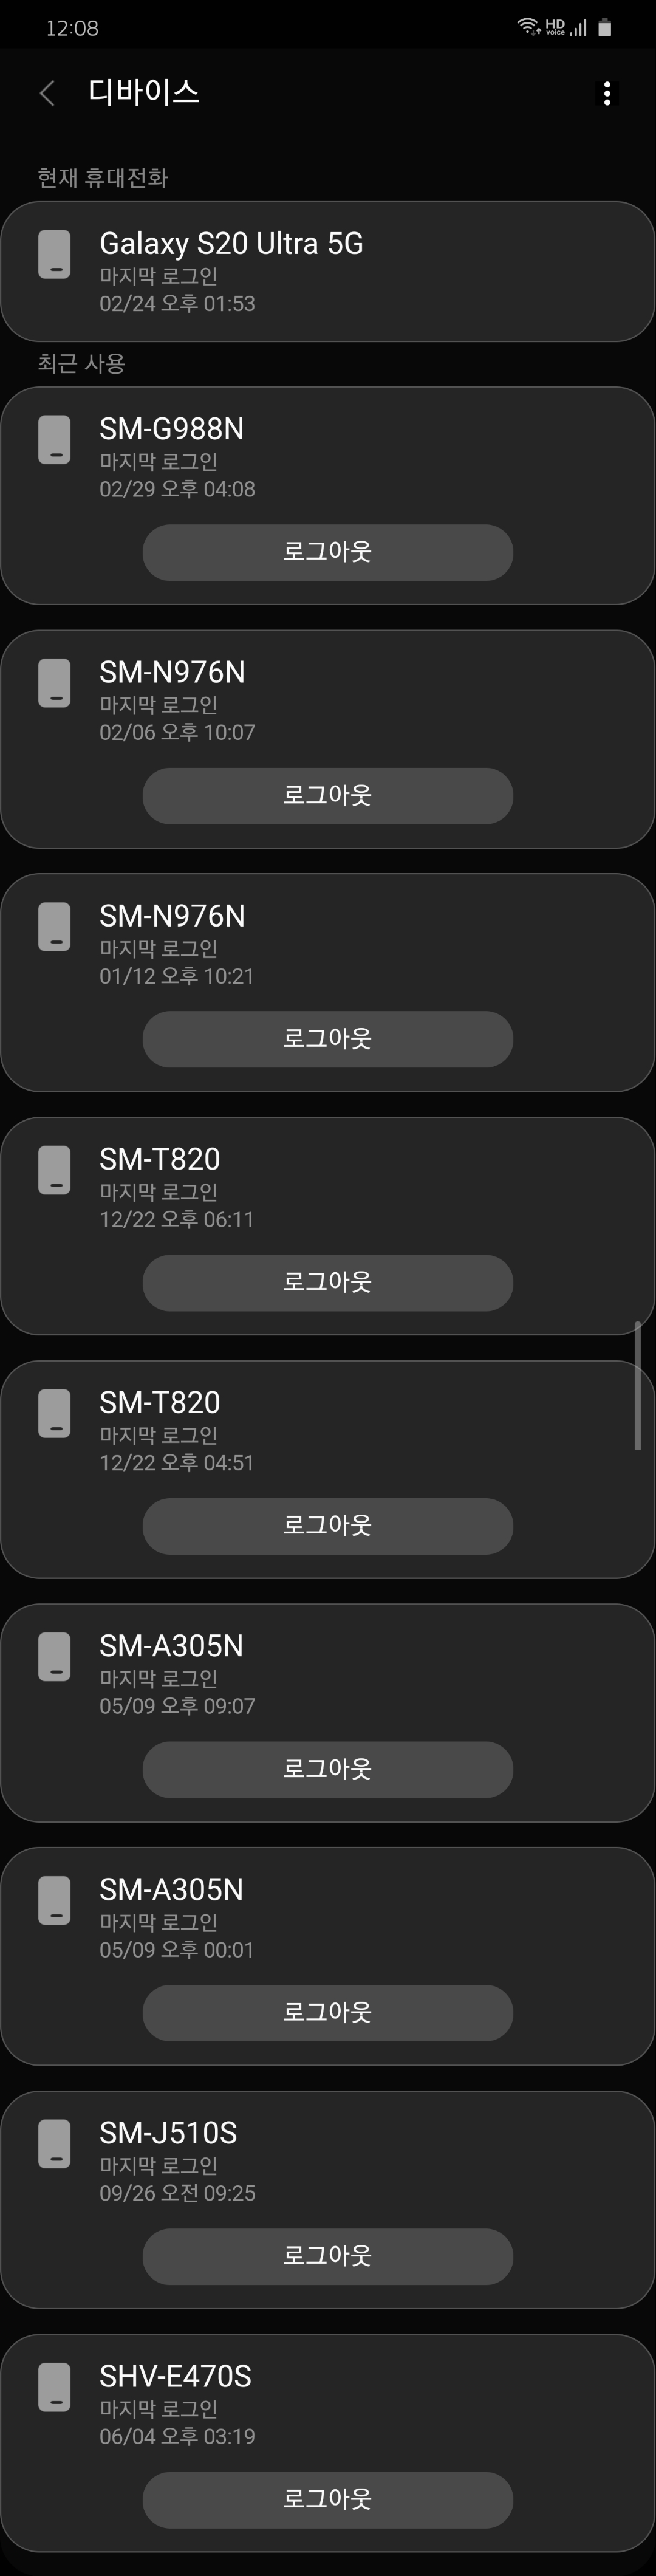 Screenshot_20200319-000853_Samsung account.jpg